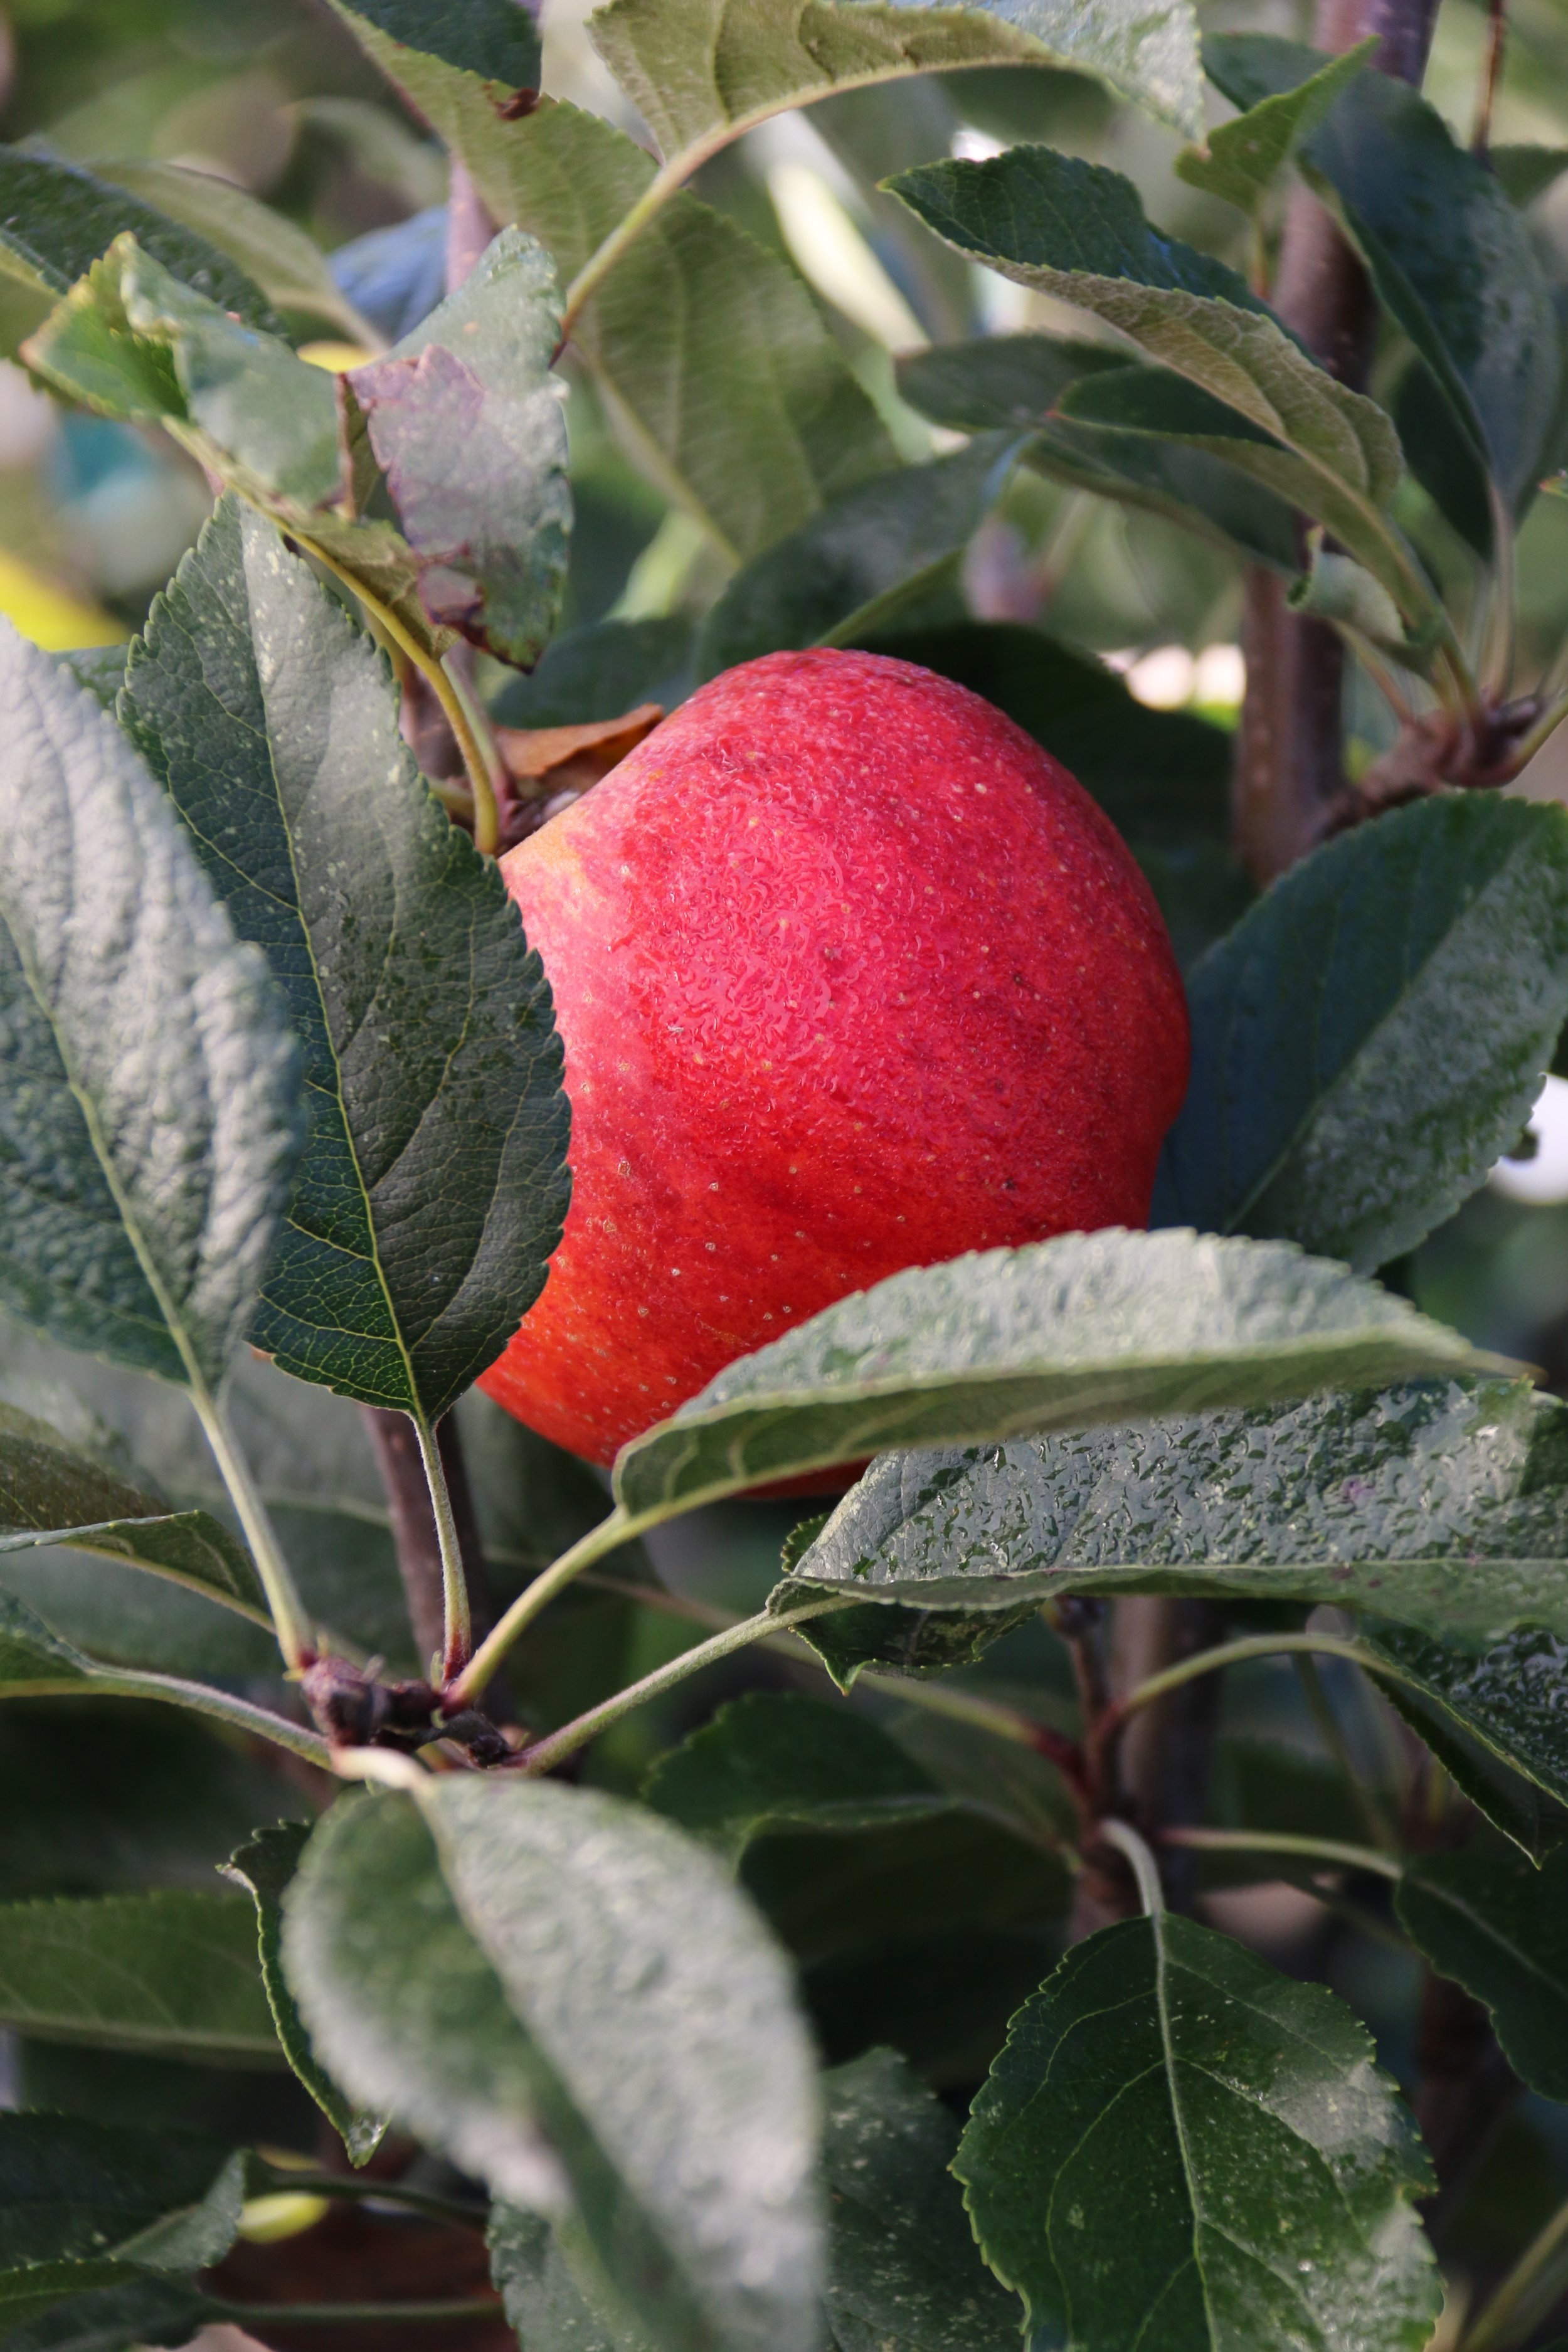 Copy of Gala Apple fruit 03.jpg